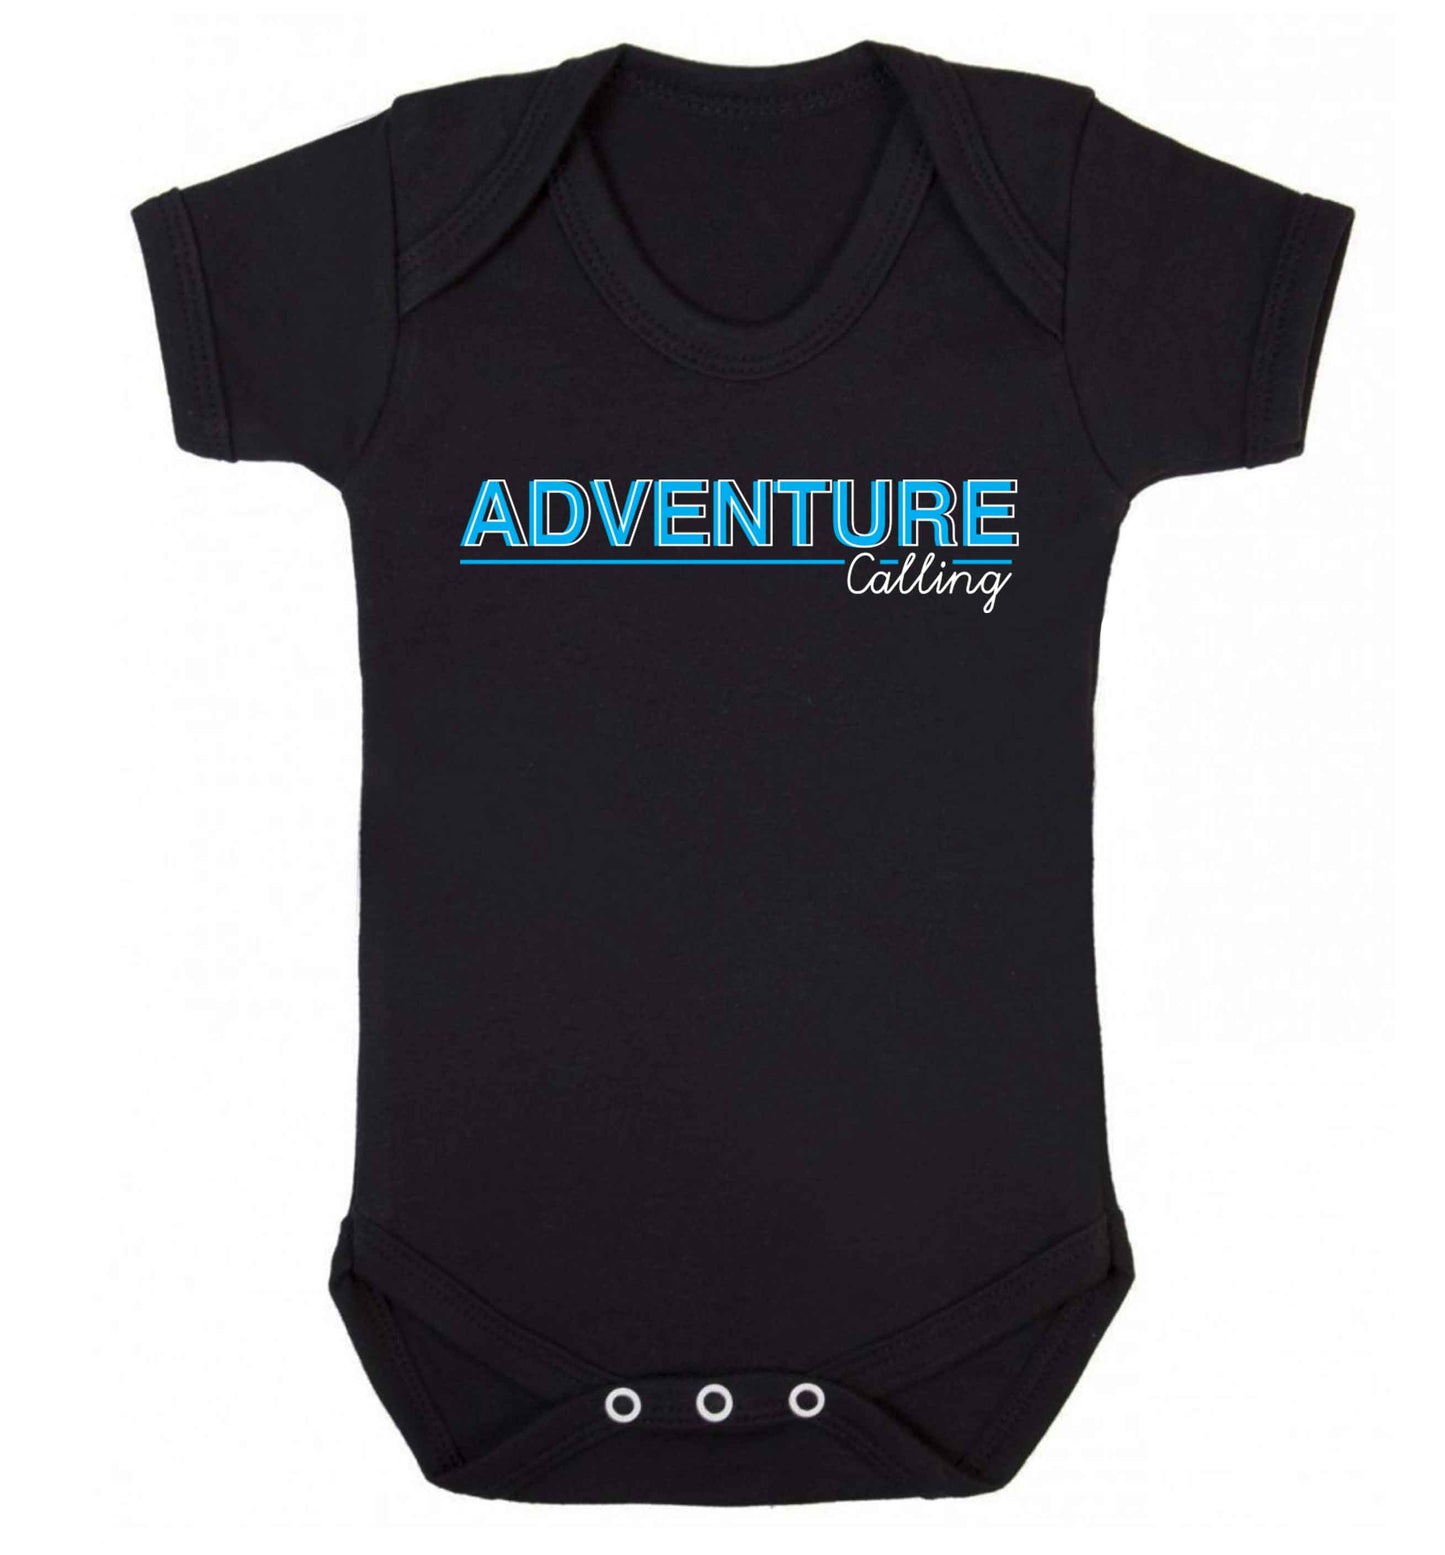 Adventure calling Baby Vest black 18-24 months